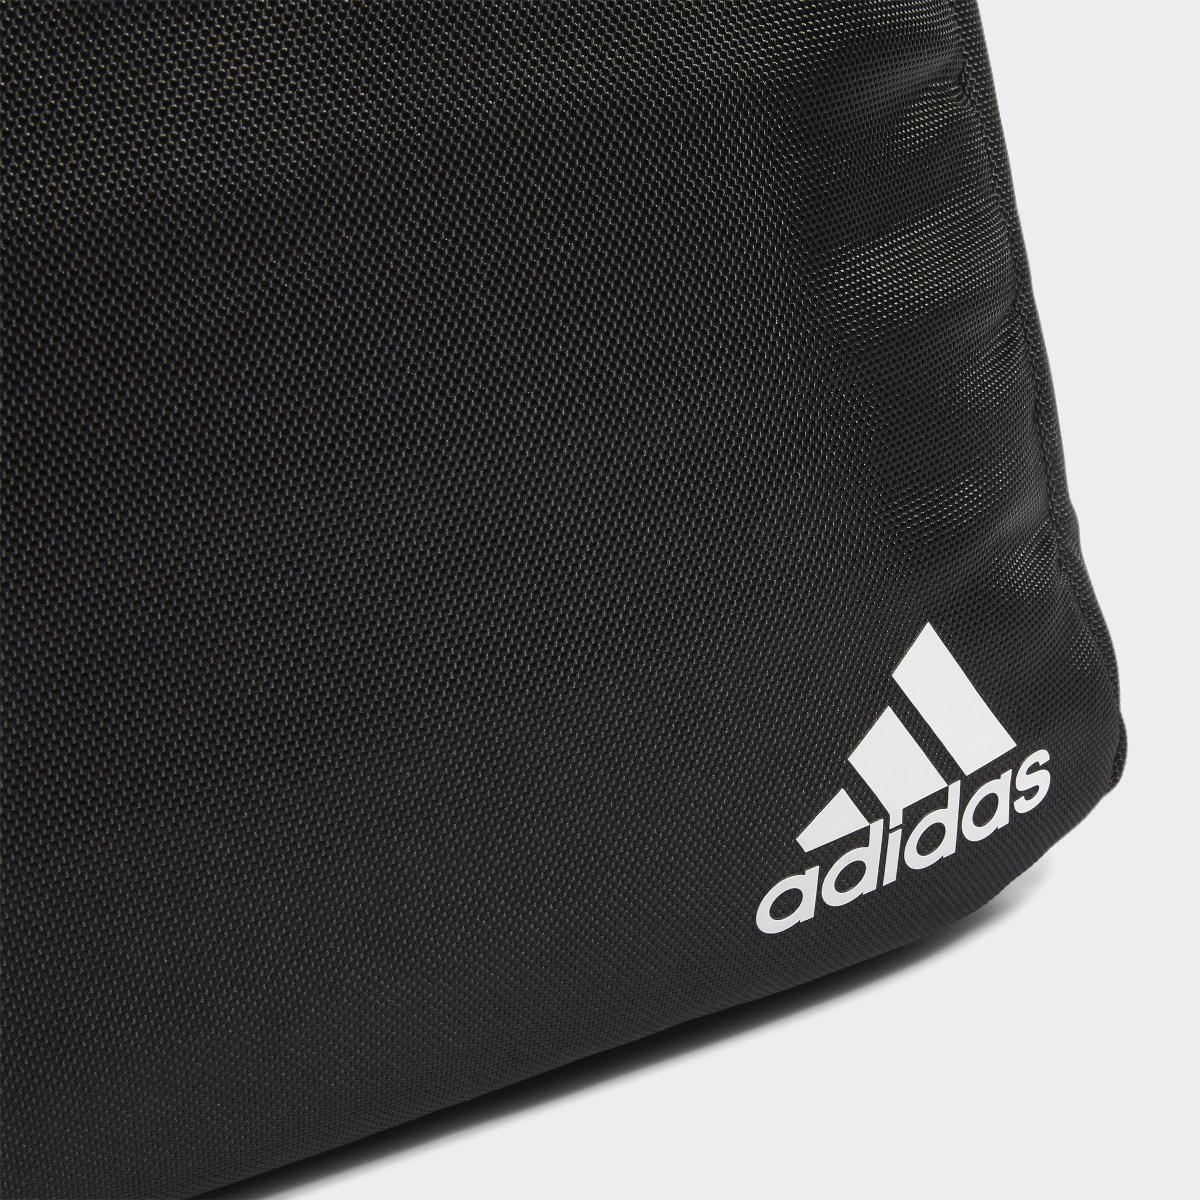 Adidas Stadium Messenger Bag. 6